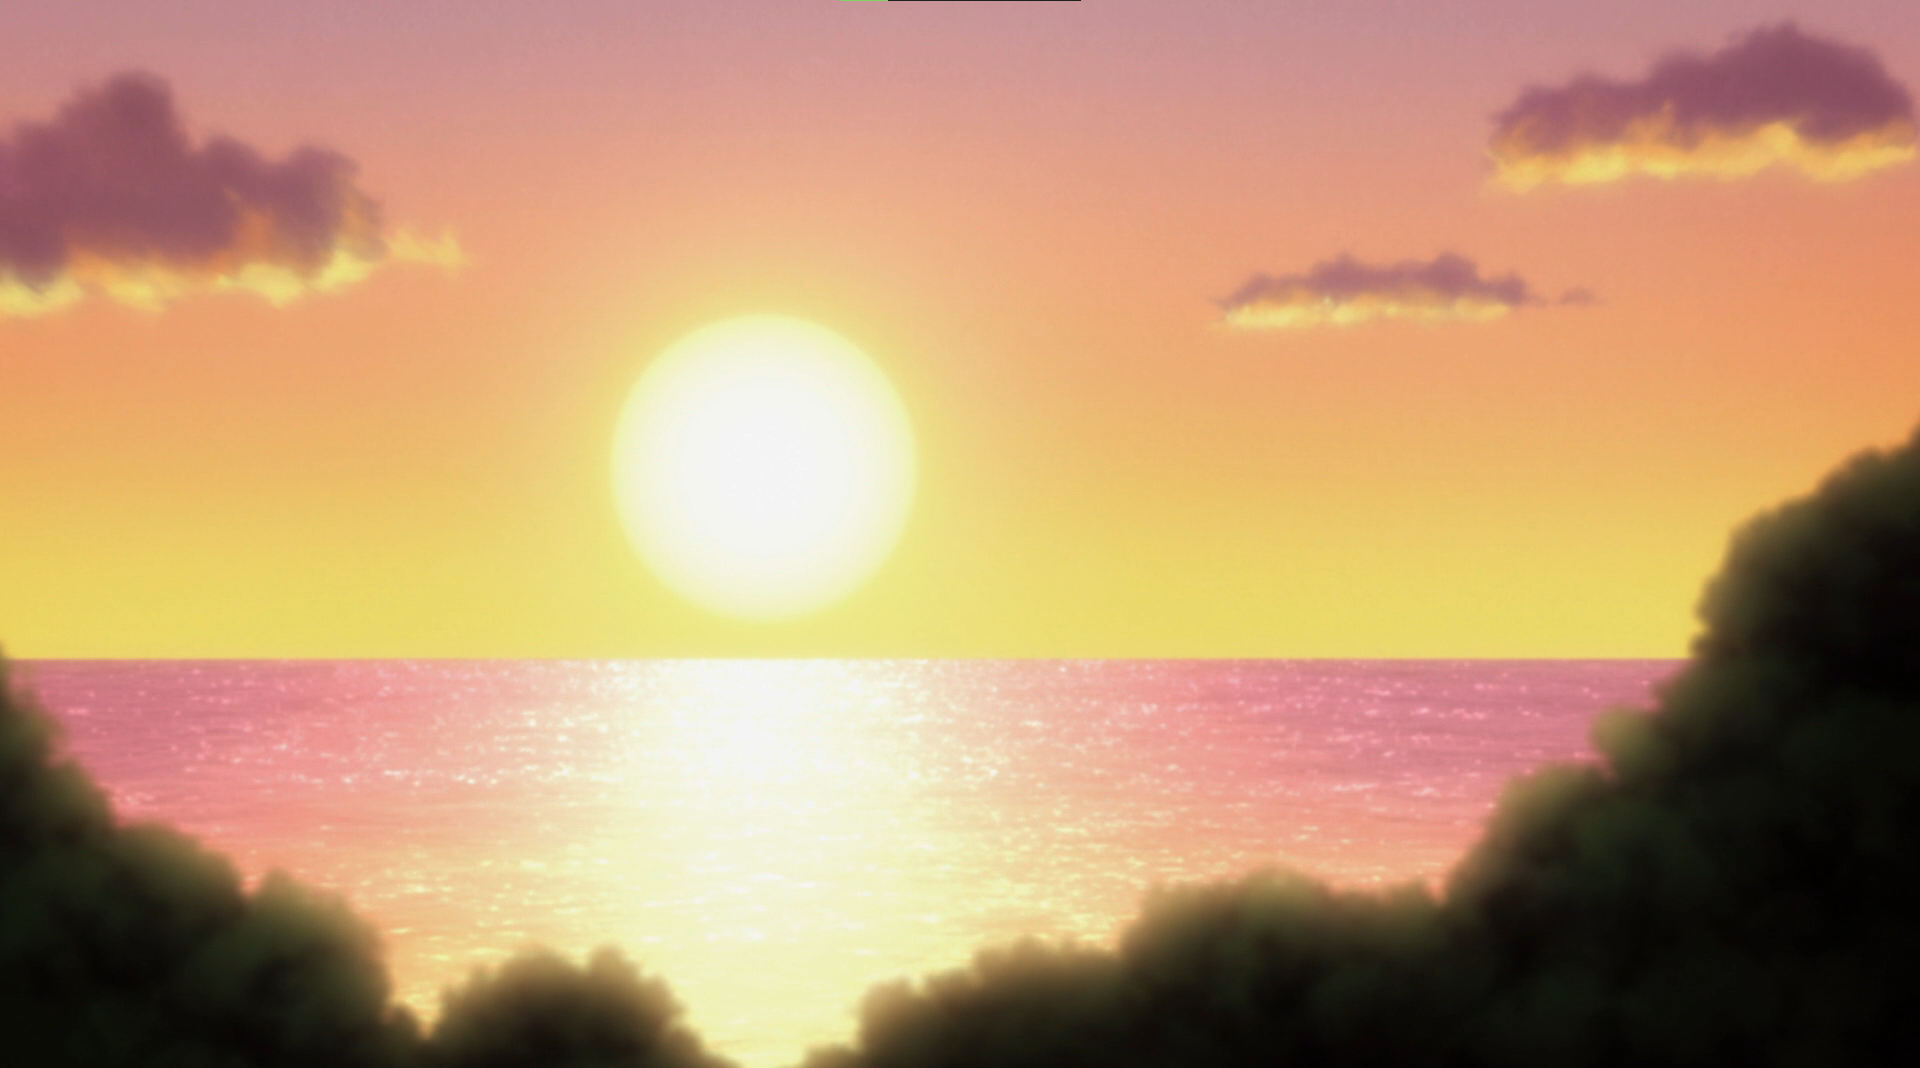 Anime 1920x1068 Hunter x Hunter sky night sunset trees nature water anime Anime screenshot Sun clouds sea sunset glow